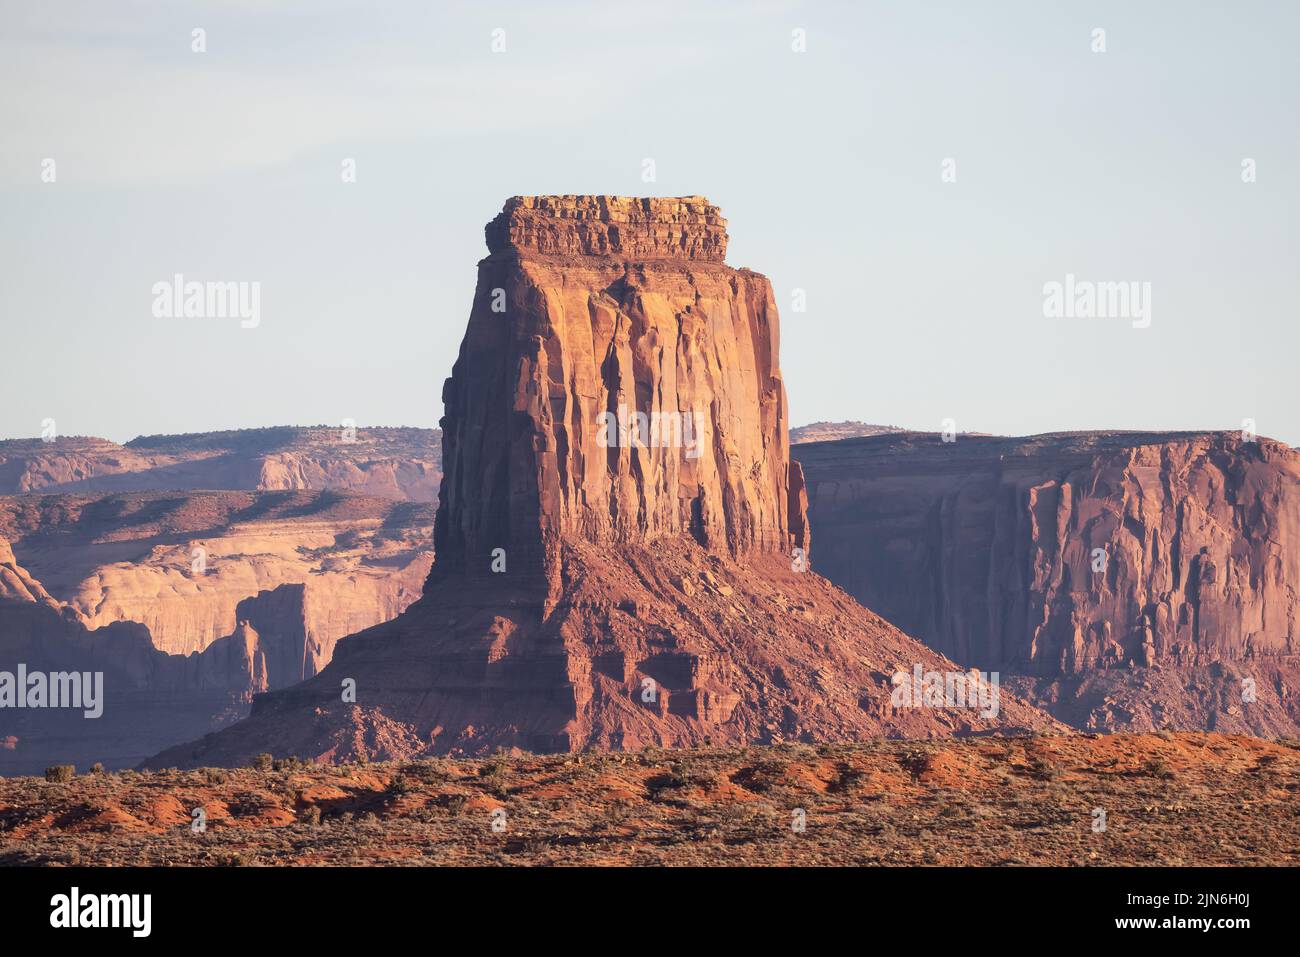 Desert Rocky Mountain American Landscape. Sunset Sky. Stock Photo